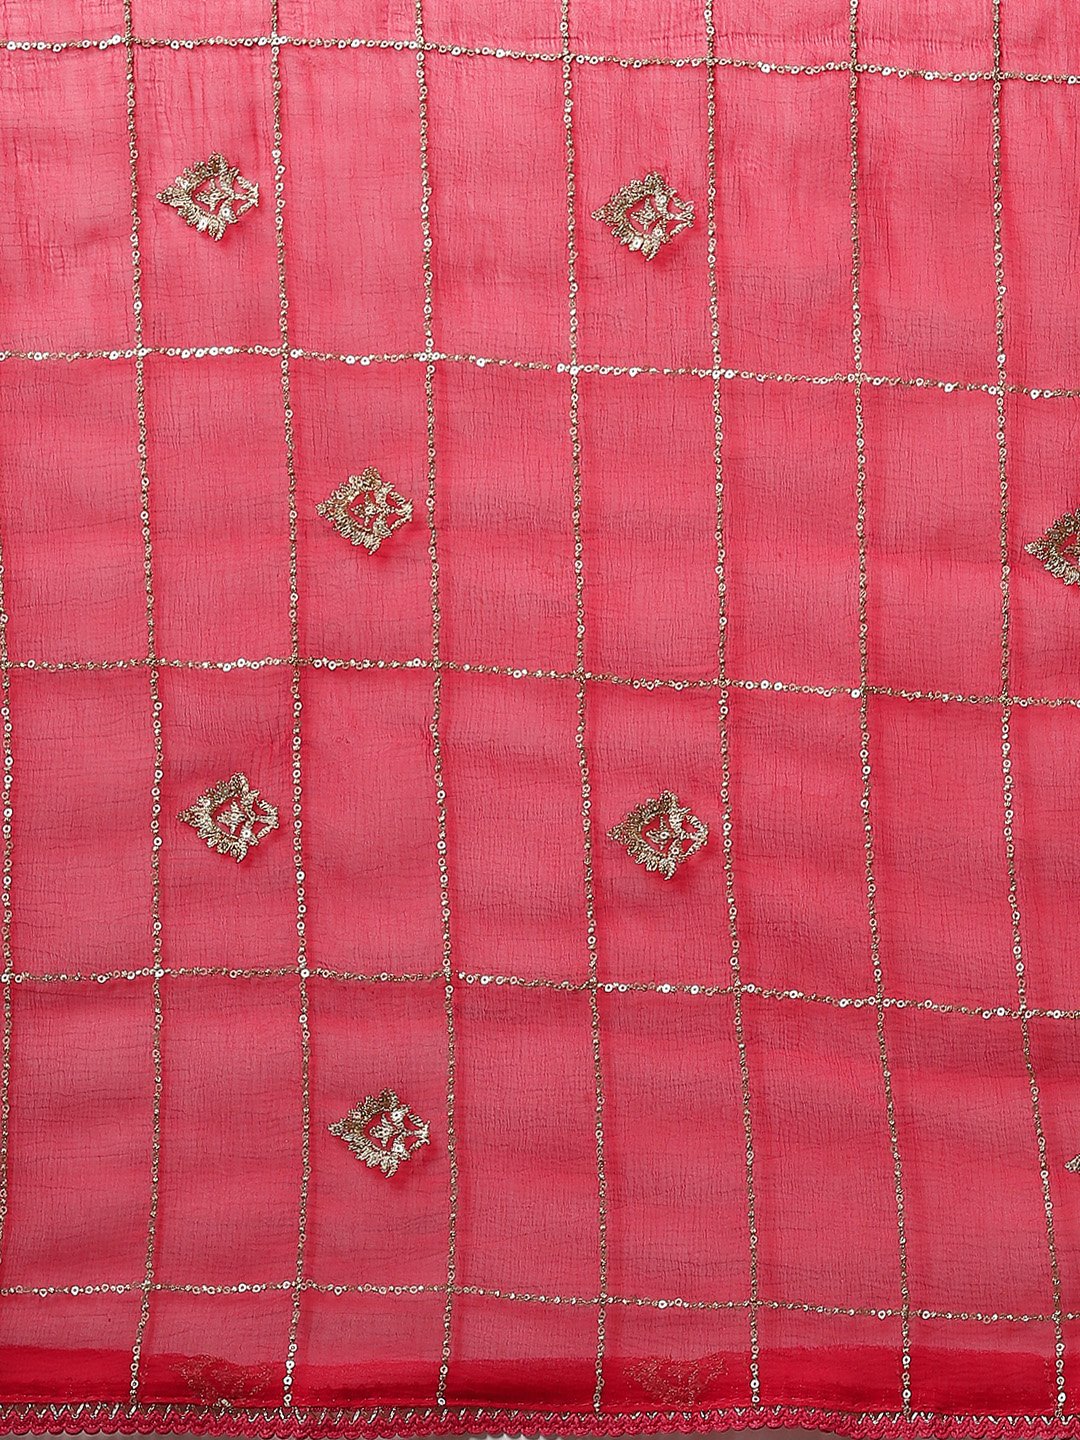 Ishin Women's Chanderi Silk Sequinned Embroidered A-Line Kurta Palazzo Dupatta Set